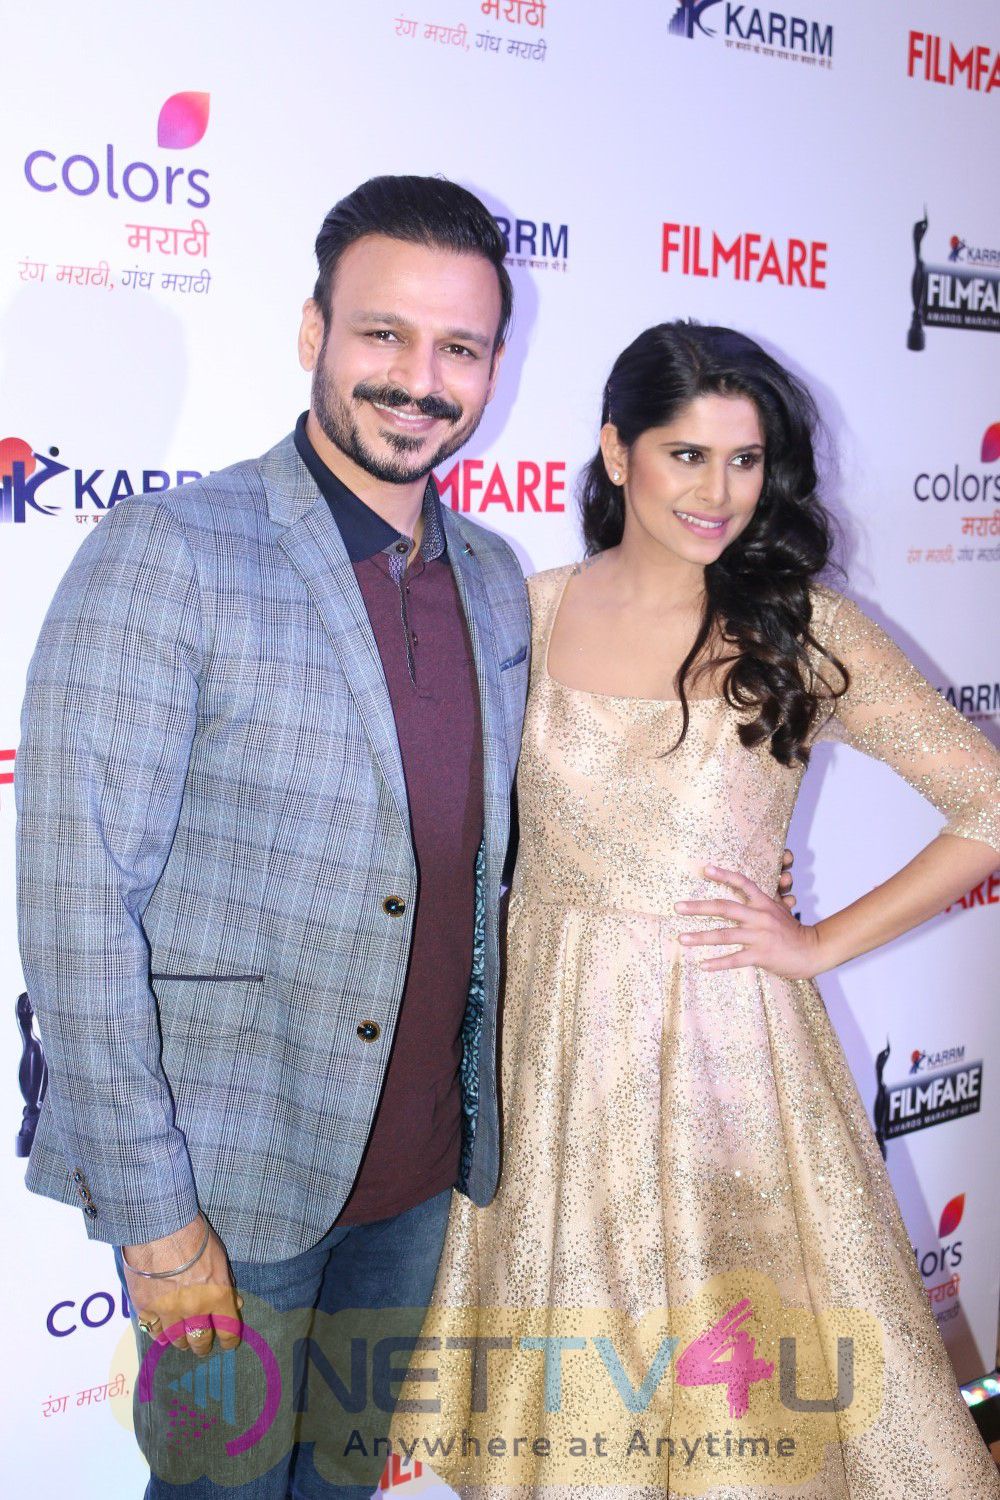 Vivek Oberoi & Sai Tamhankar Announcement Pc Of Filmfare Awards Images Hindi Gallery